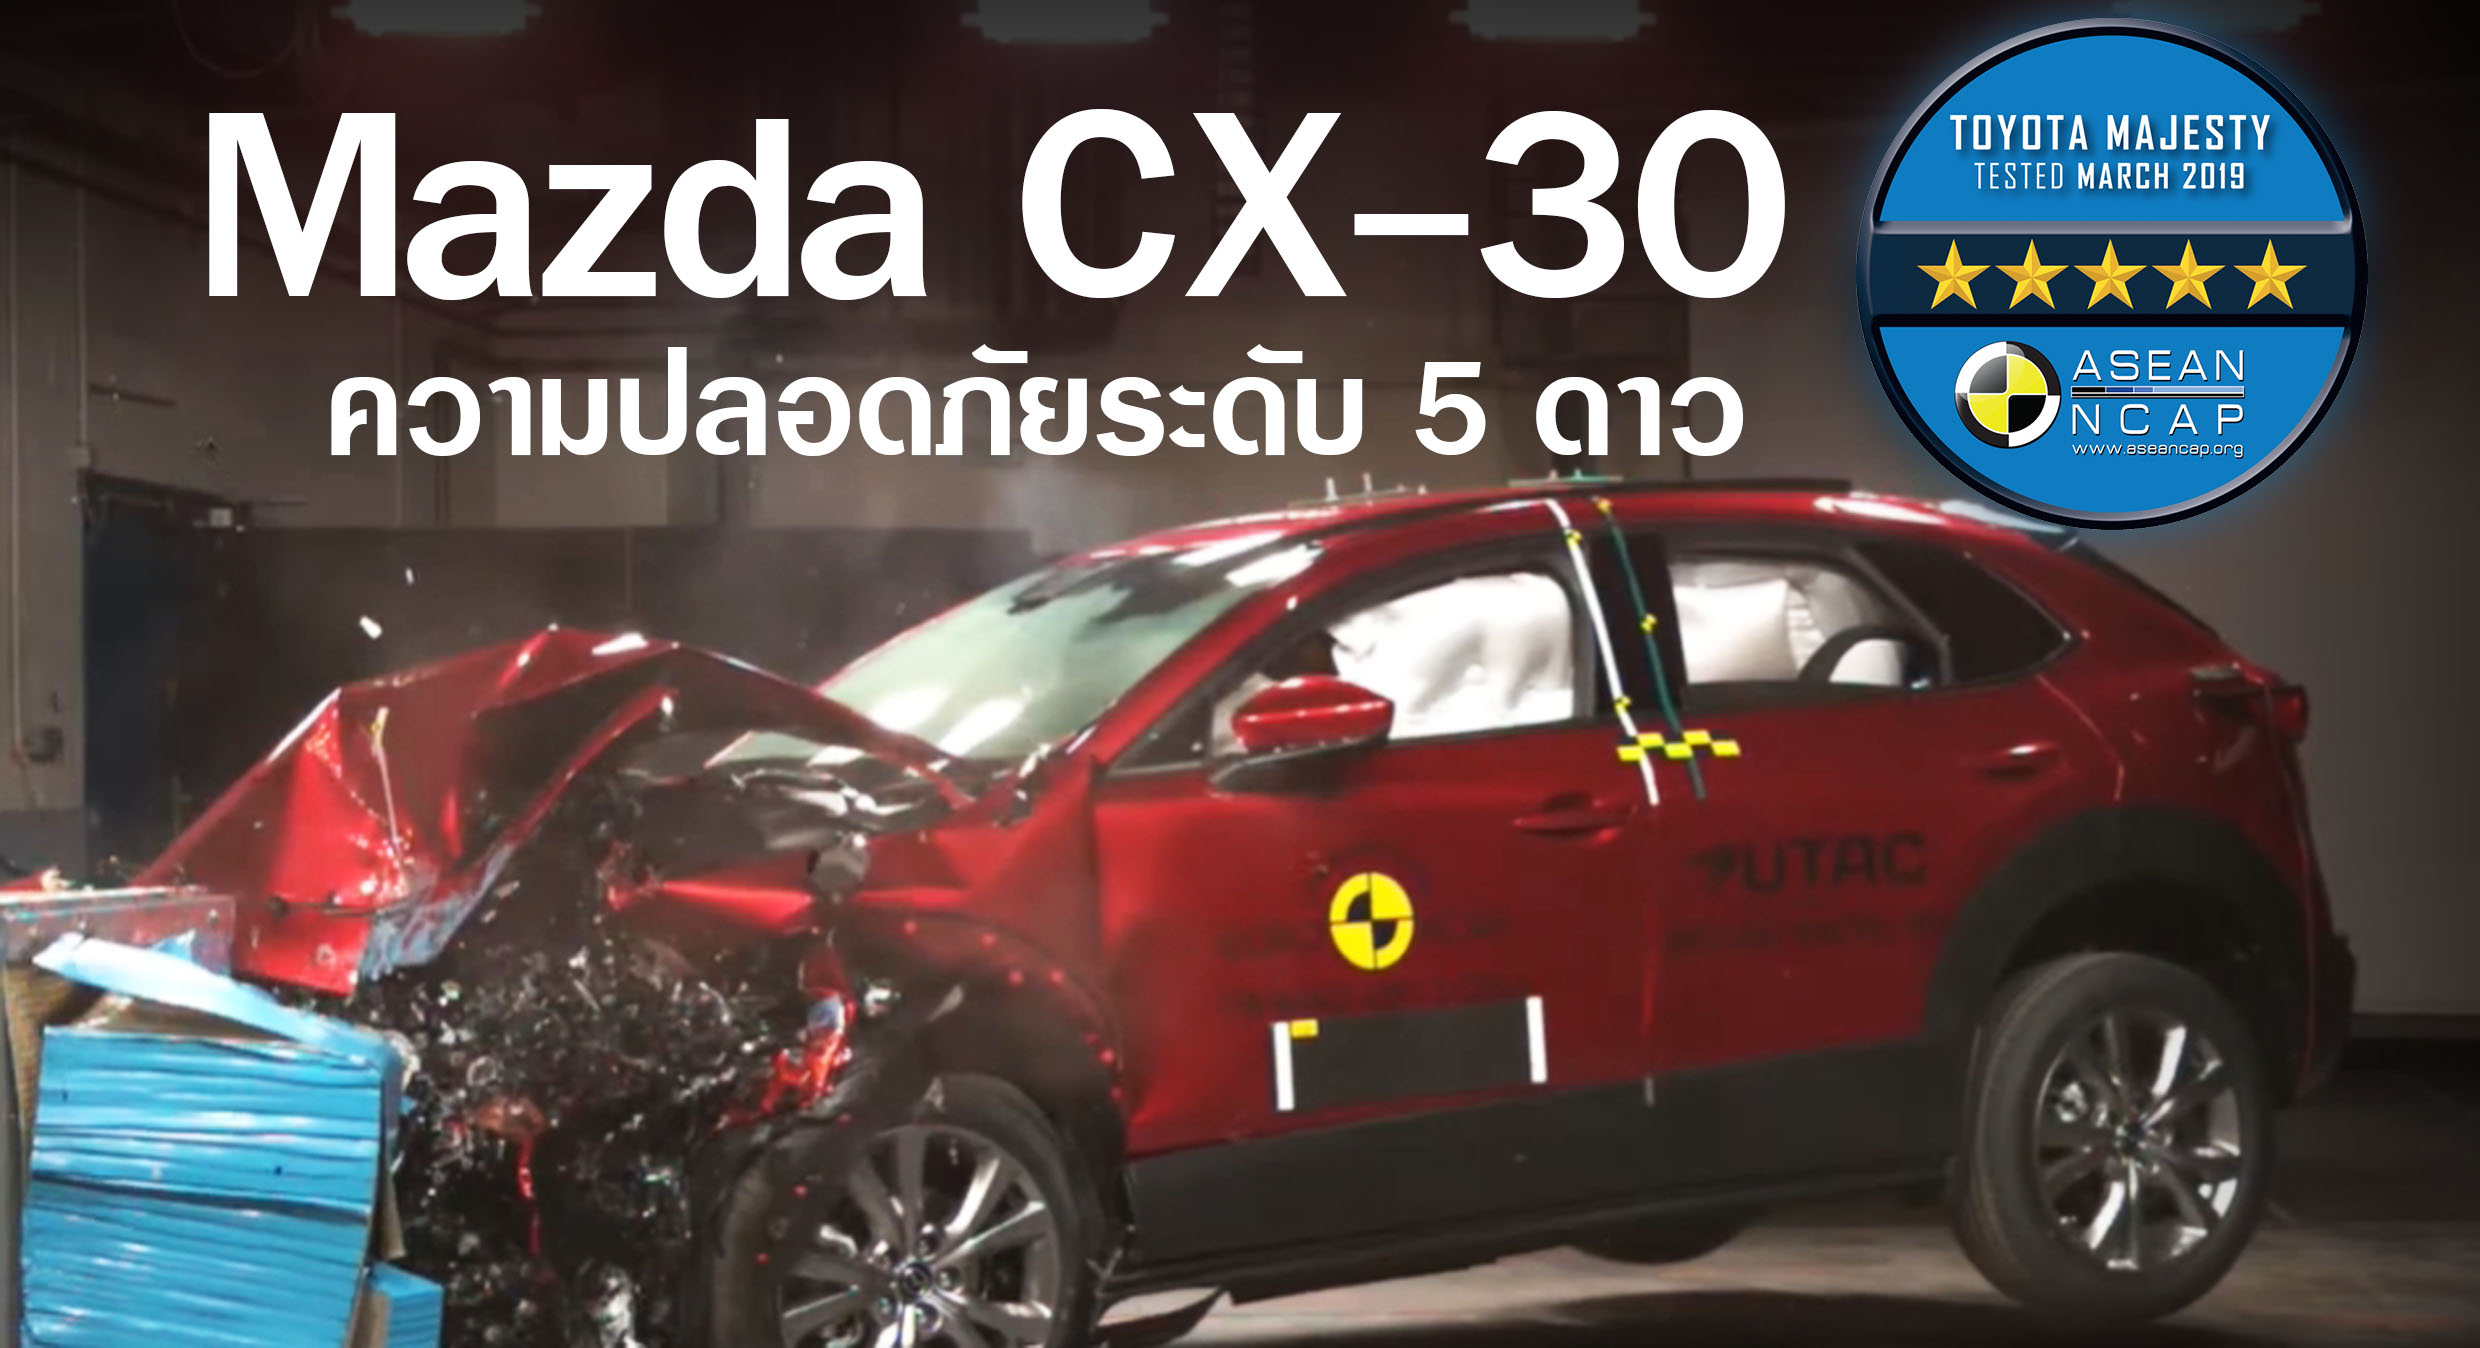 Mazda CX-30 ผ่านมาตรฐานความปลอดภัย ASEAN NCAP 5 ดาว